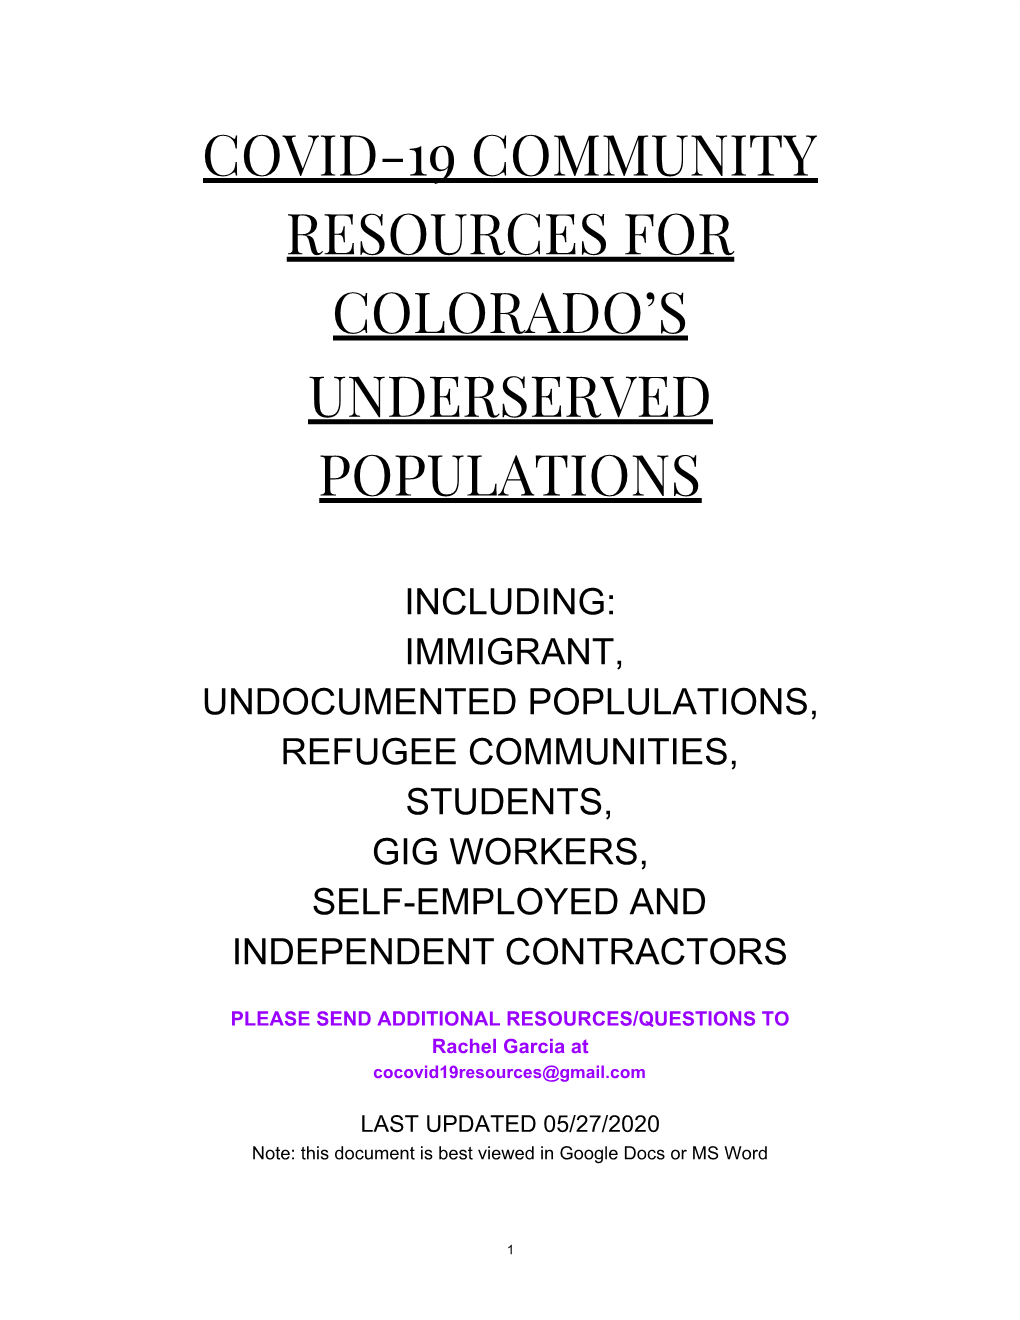 Covid-19 Community Resources for Colorado's